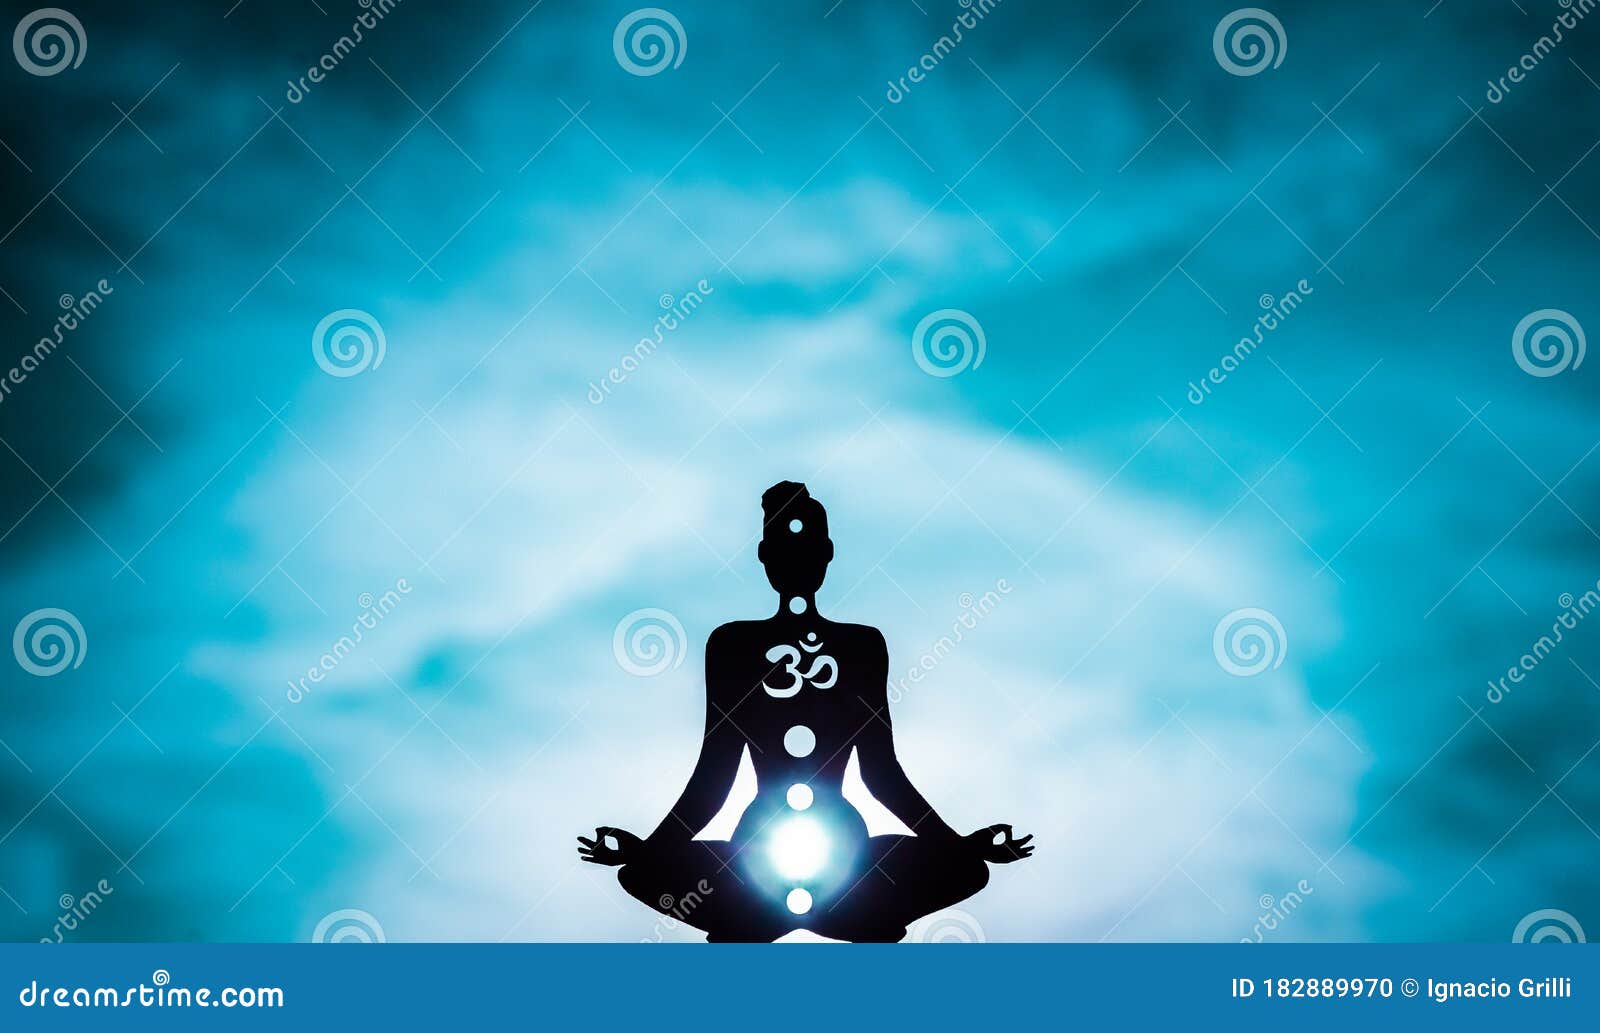 yoga position silhouette in contrasting sun, throat chakra